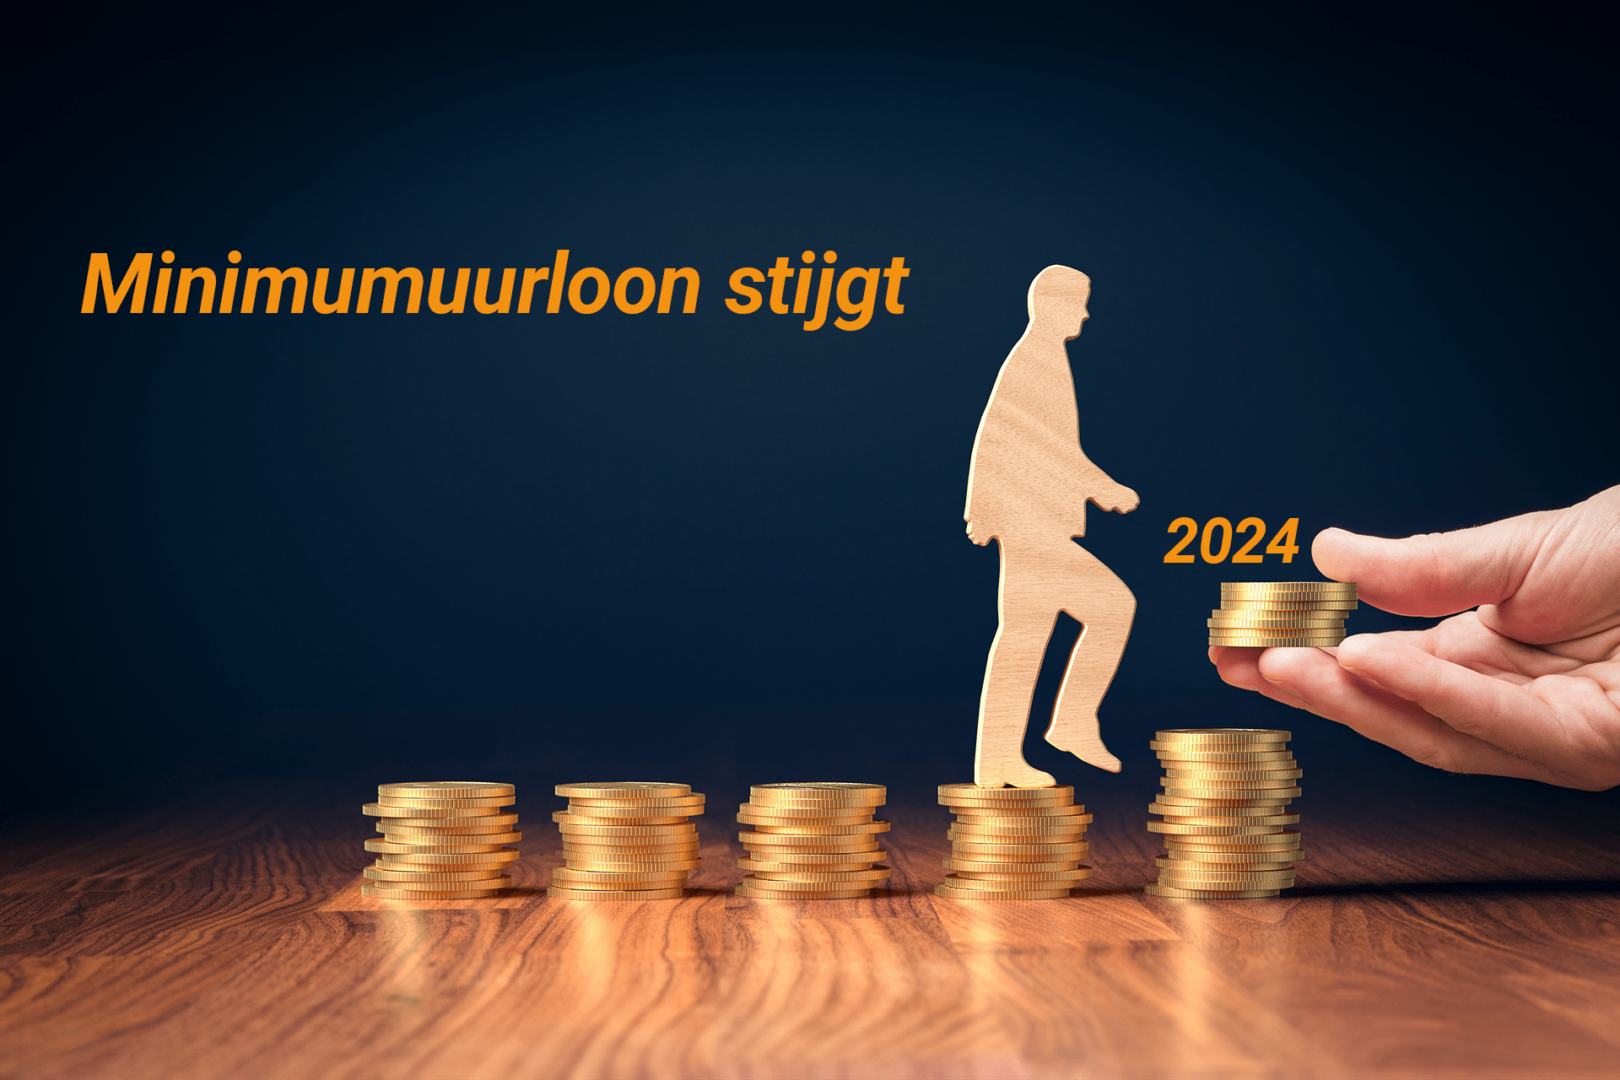 Het wettelijke minimumuurloon stijg per 1 januari 2024